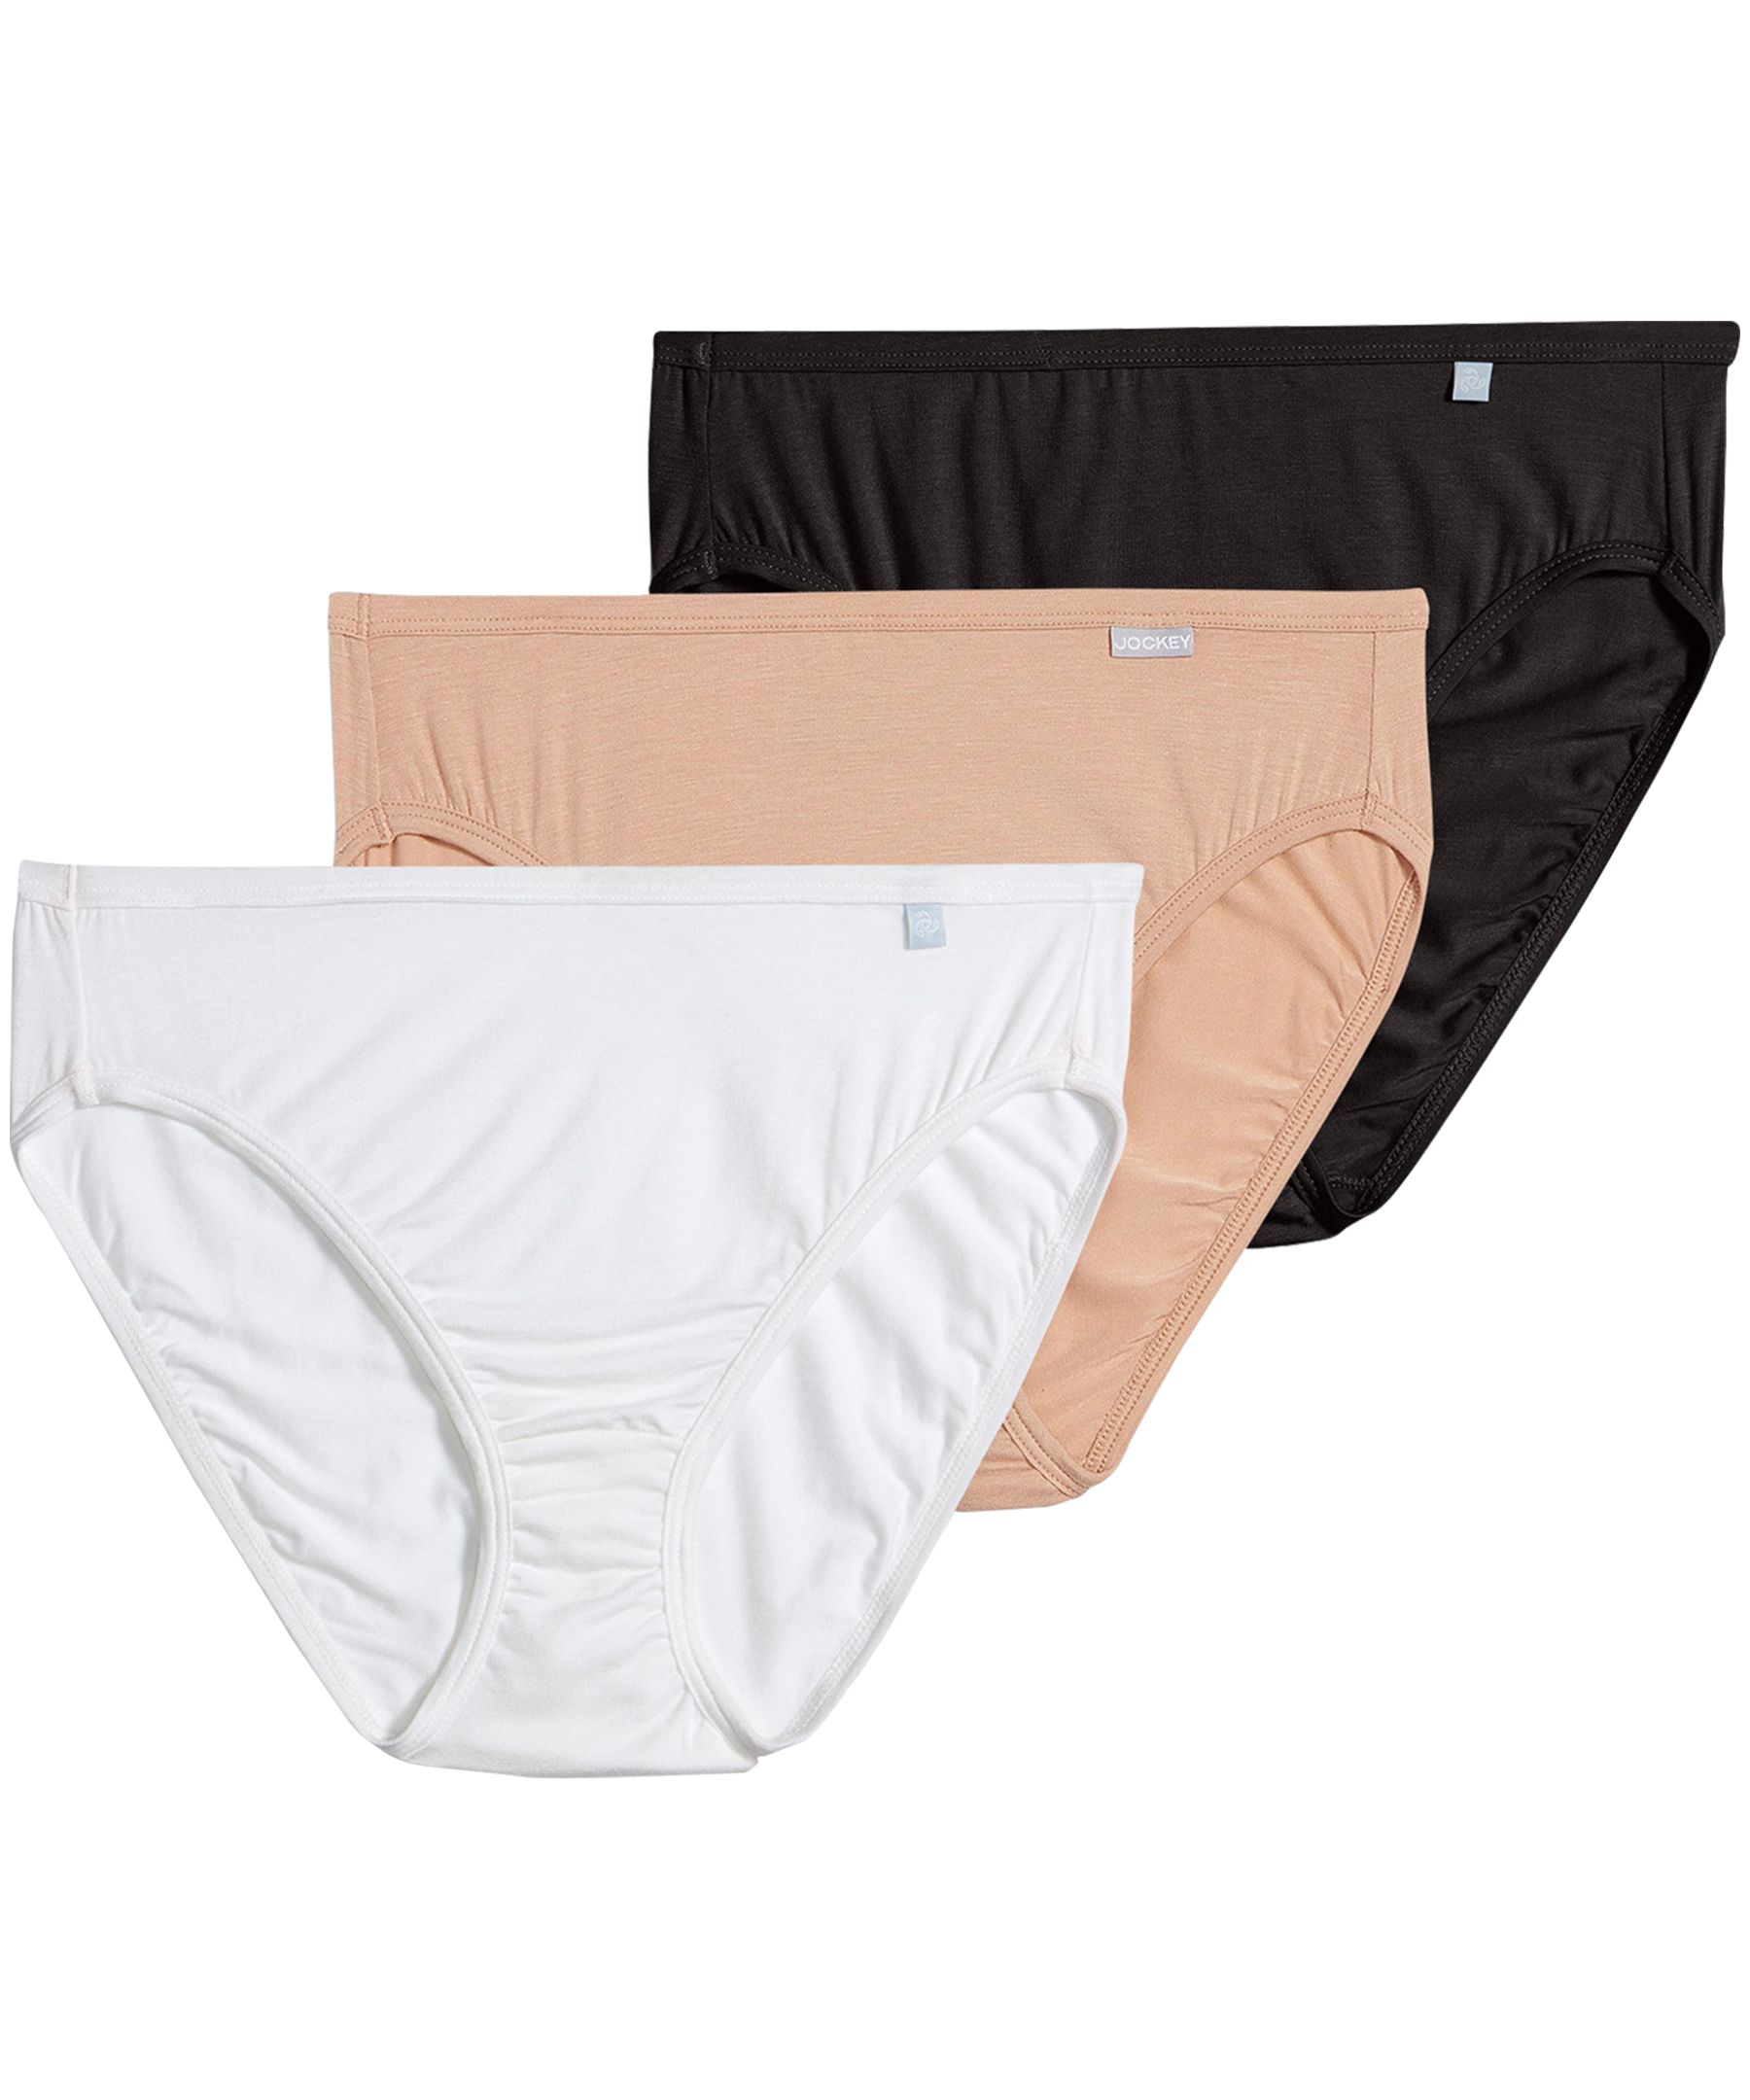 Jockey Plus 3-Pack Elance Cotton French Cut Panties